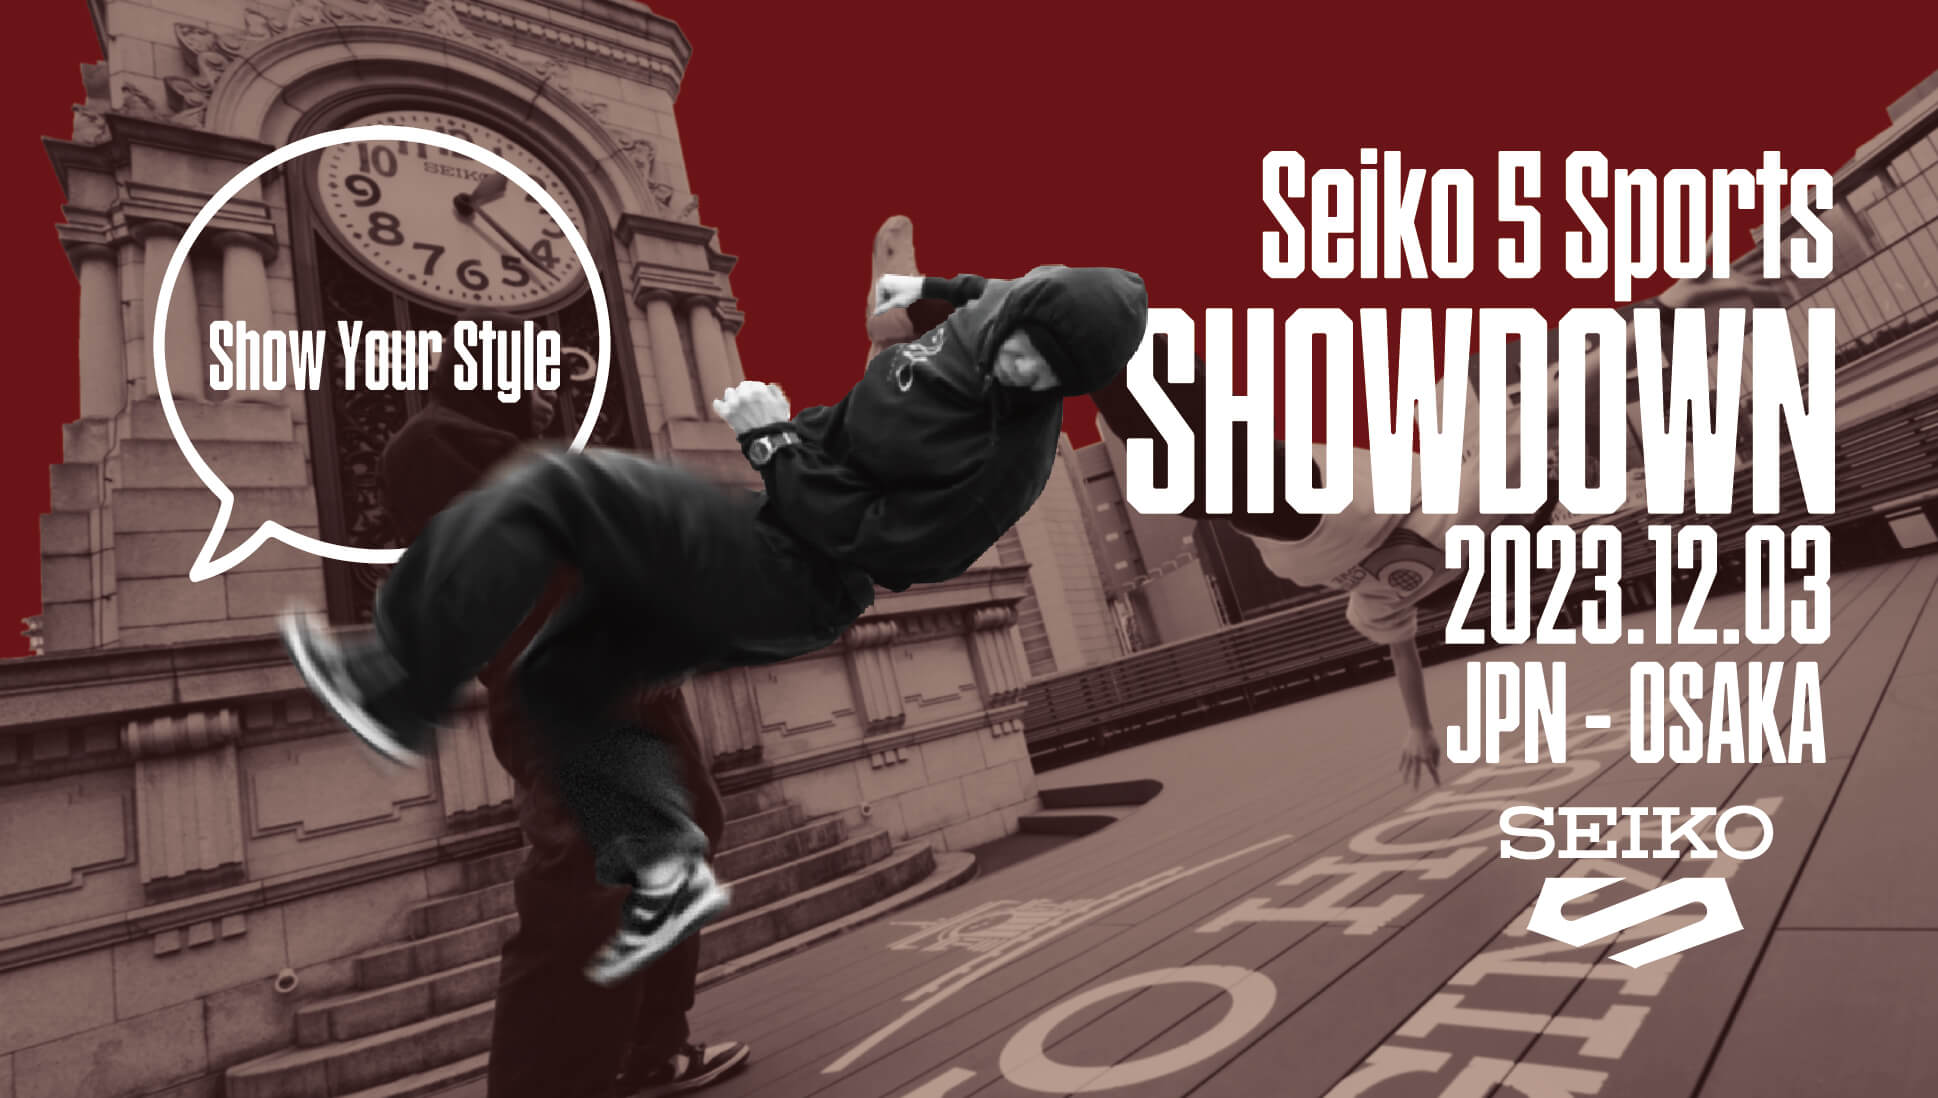 Seiko 5 Sports SHOWDOWN 2023.12.03 JPN-OSAKA